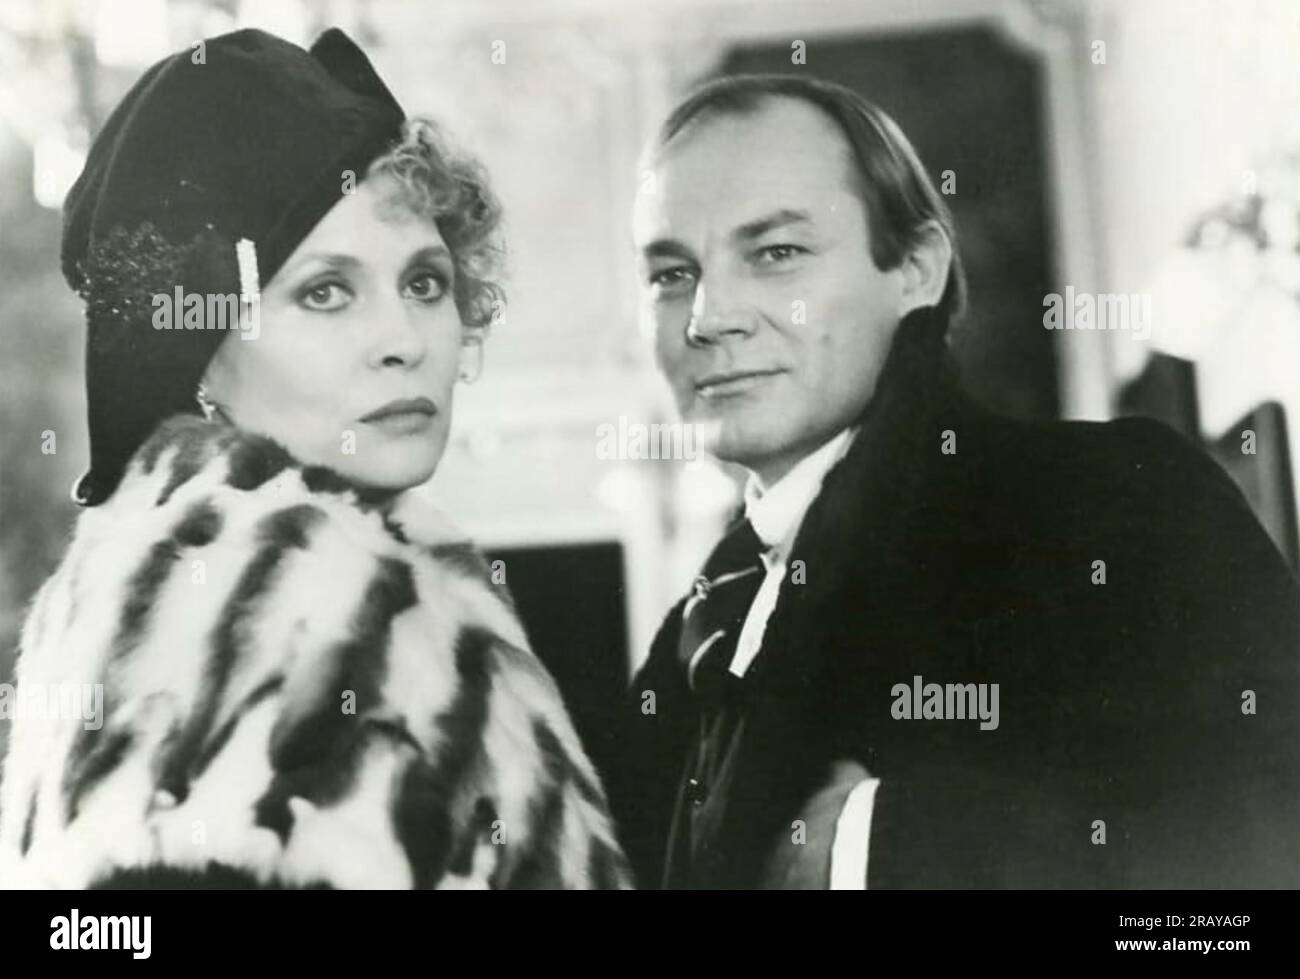 BURNING SECRET 1988 Vestron Pictures film con Faye Dunaway e Klaus Maria  Brandauer Foto stock - Alamy